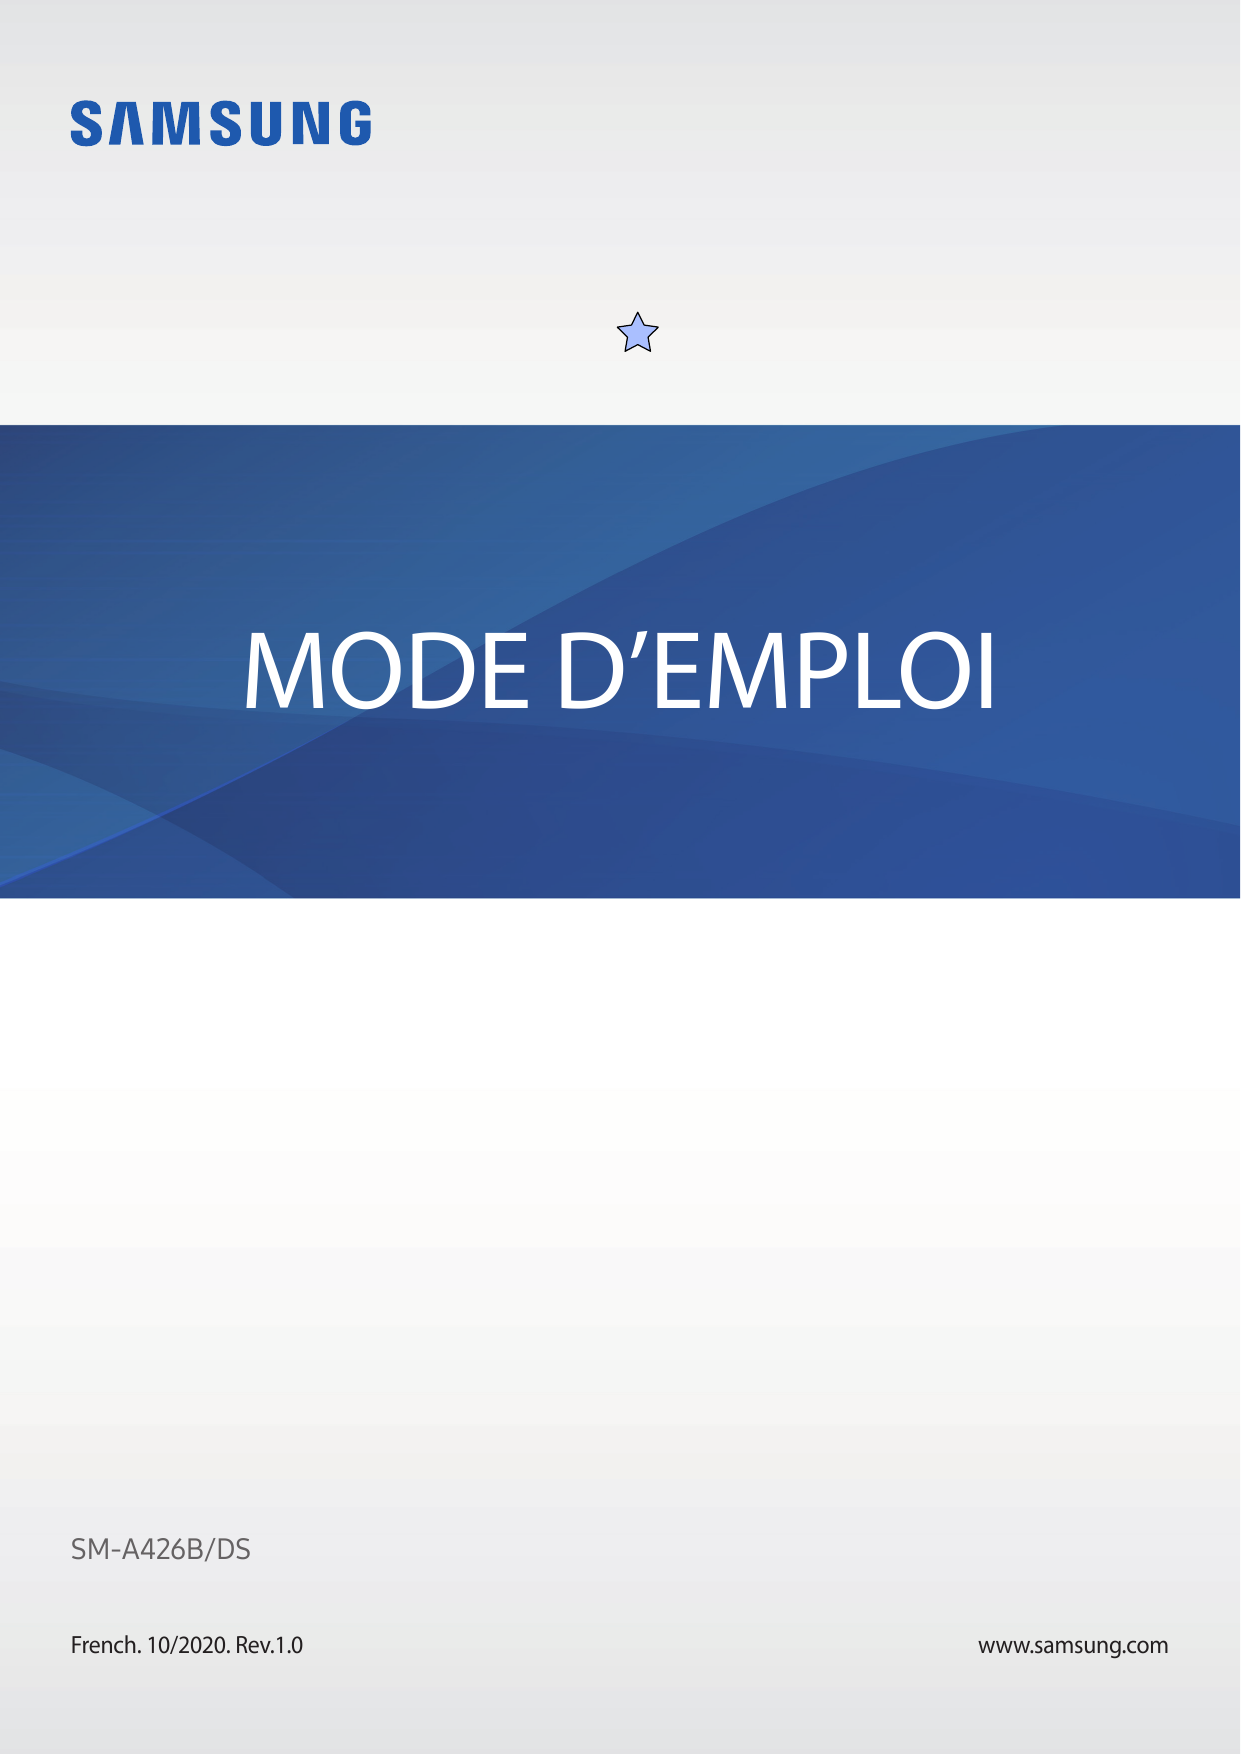 MODE D’EMPLOISM-A426B/DSFrench. 10/2020. Rev.1.0www.samsung.com